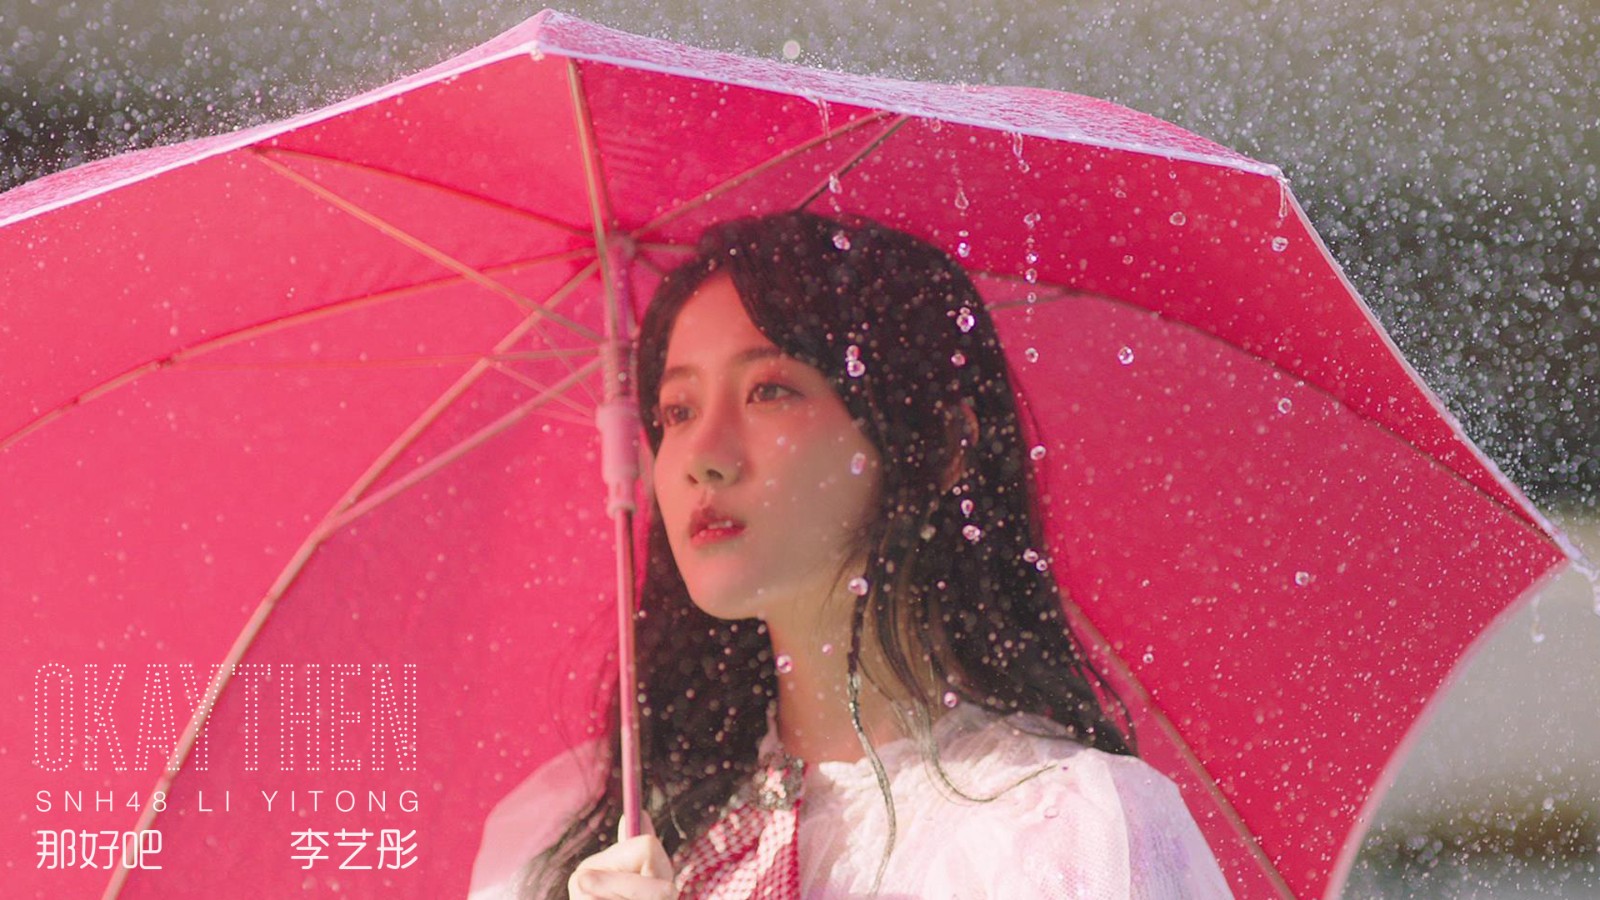 SNH48李艺彤首张个人EP《那好吧》音源首发 雨中深情开唱